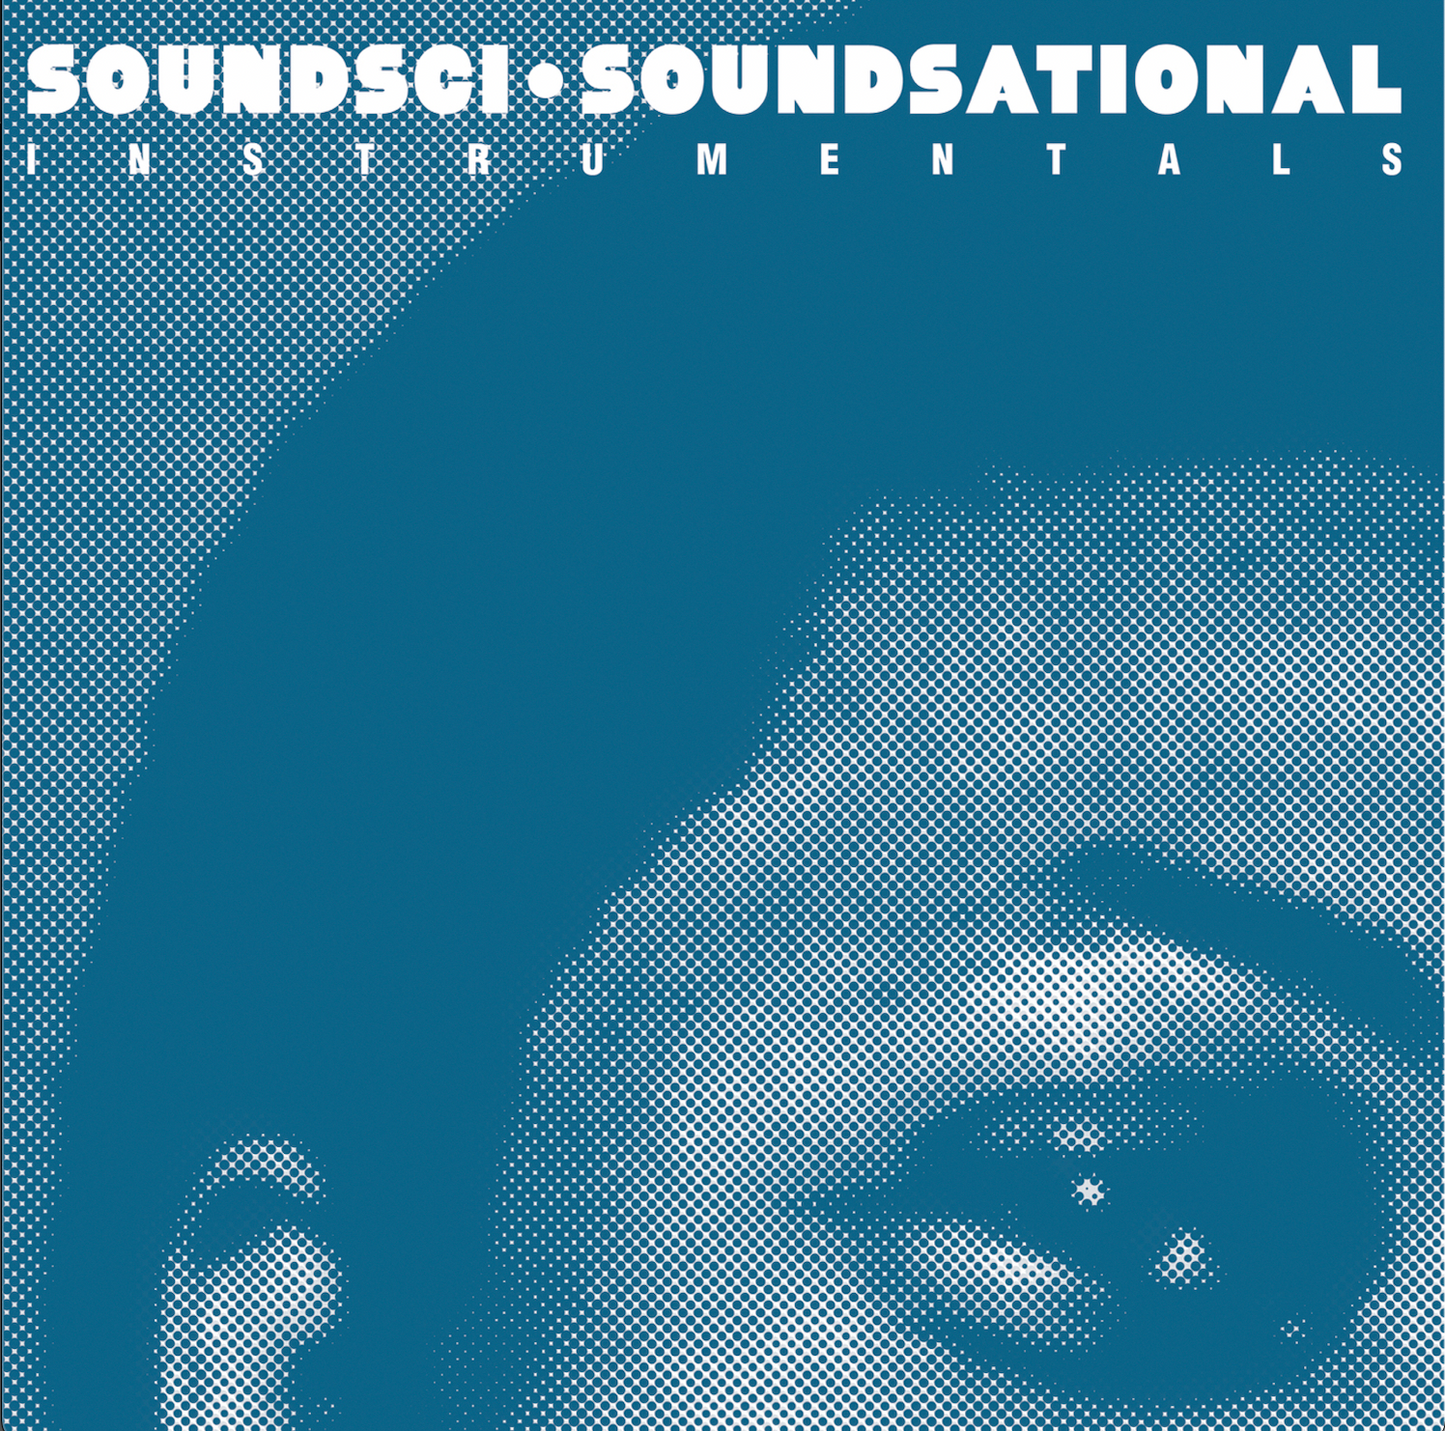 Soundsci "Soundsational Instrumentals" LP